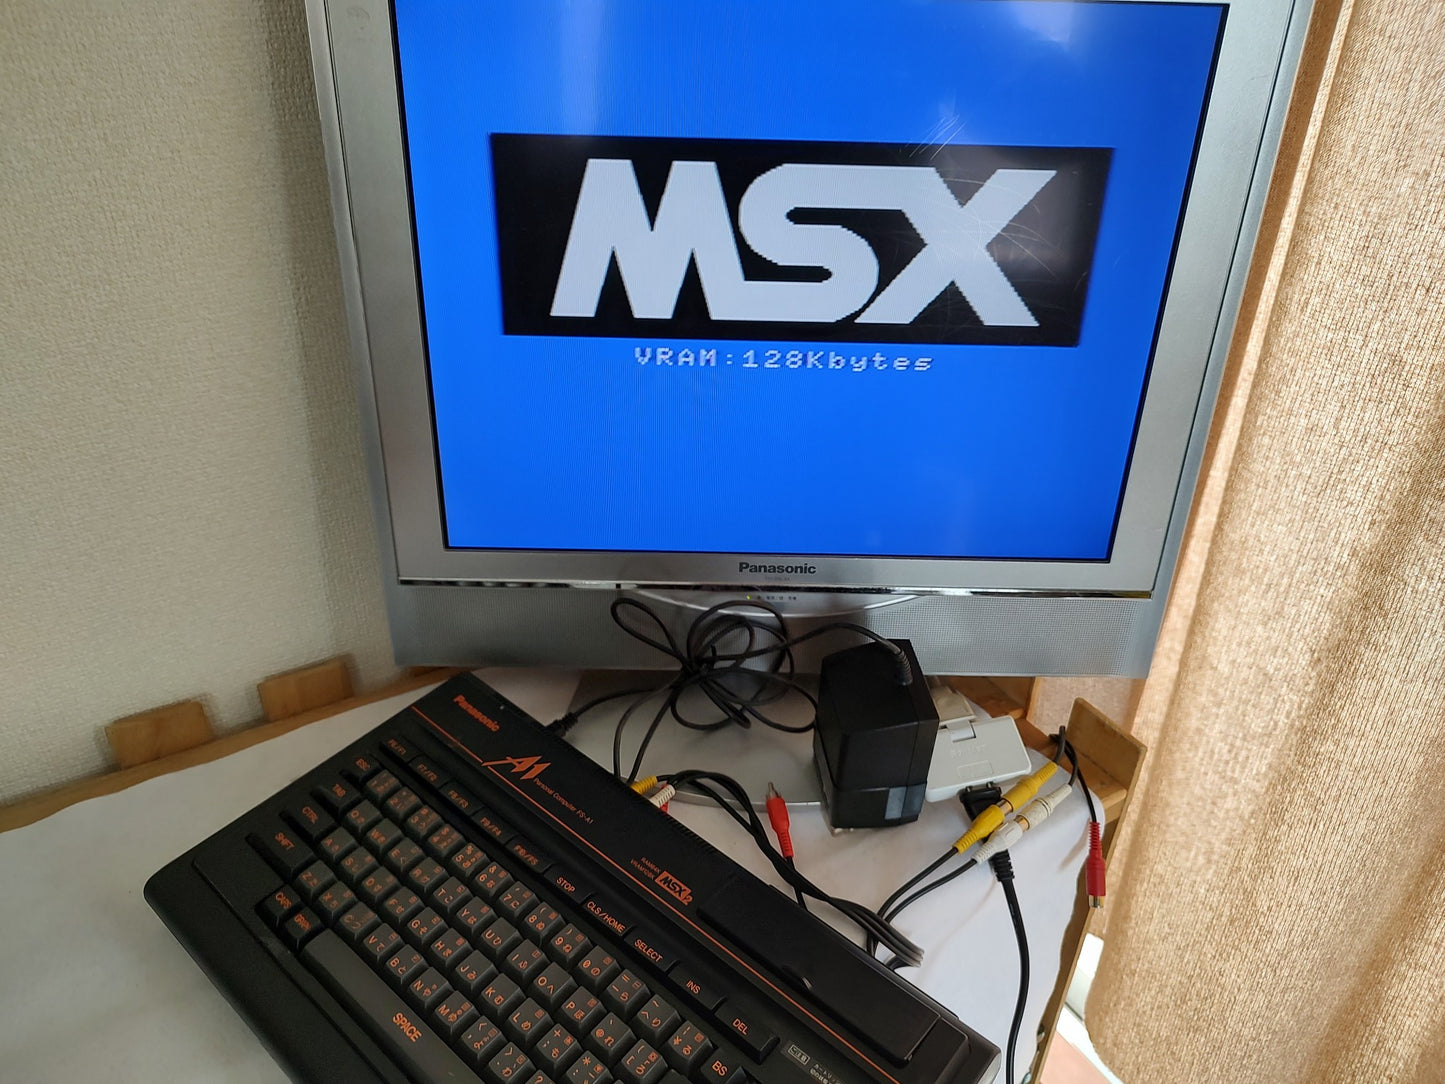 Panasonic MSX2 FS-A1 MK2 Personal Computer and PSU set, Working-g0328-